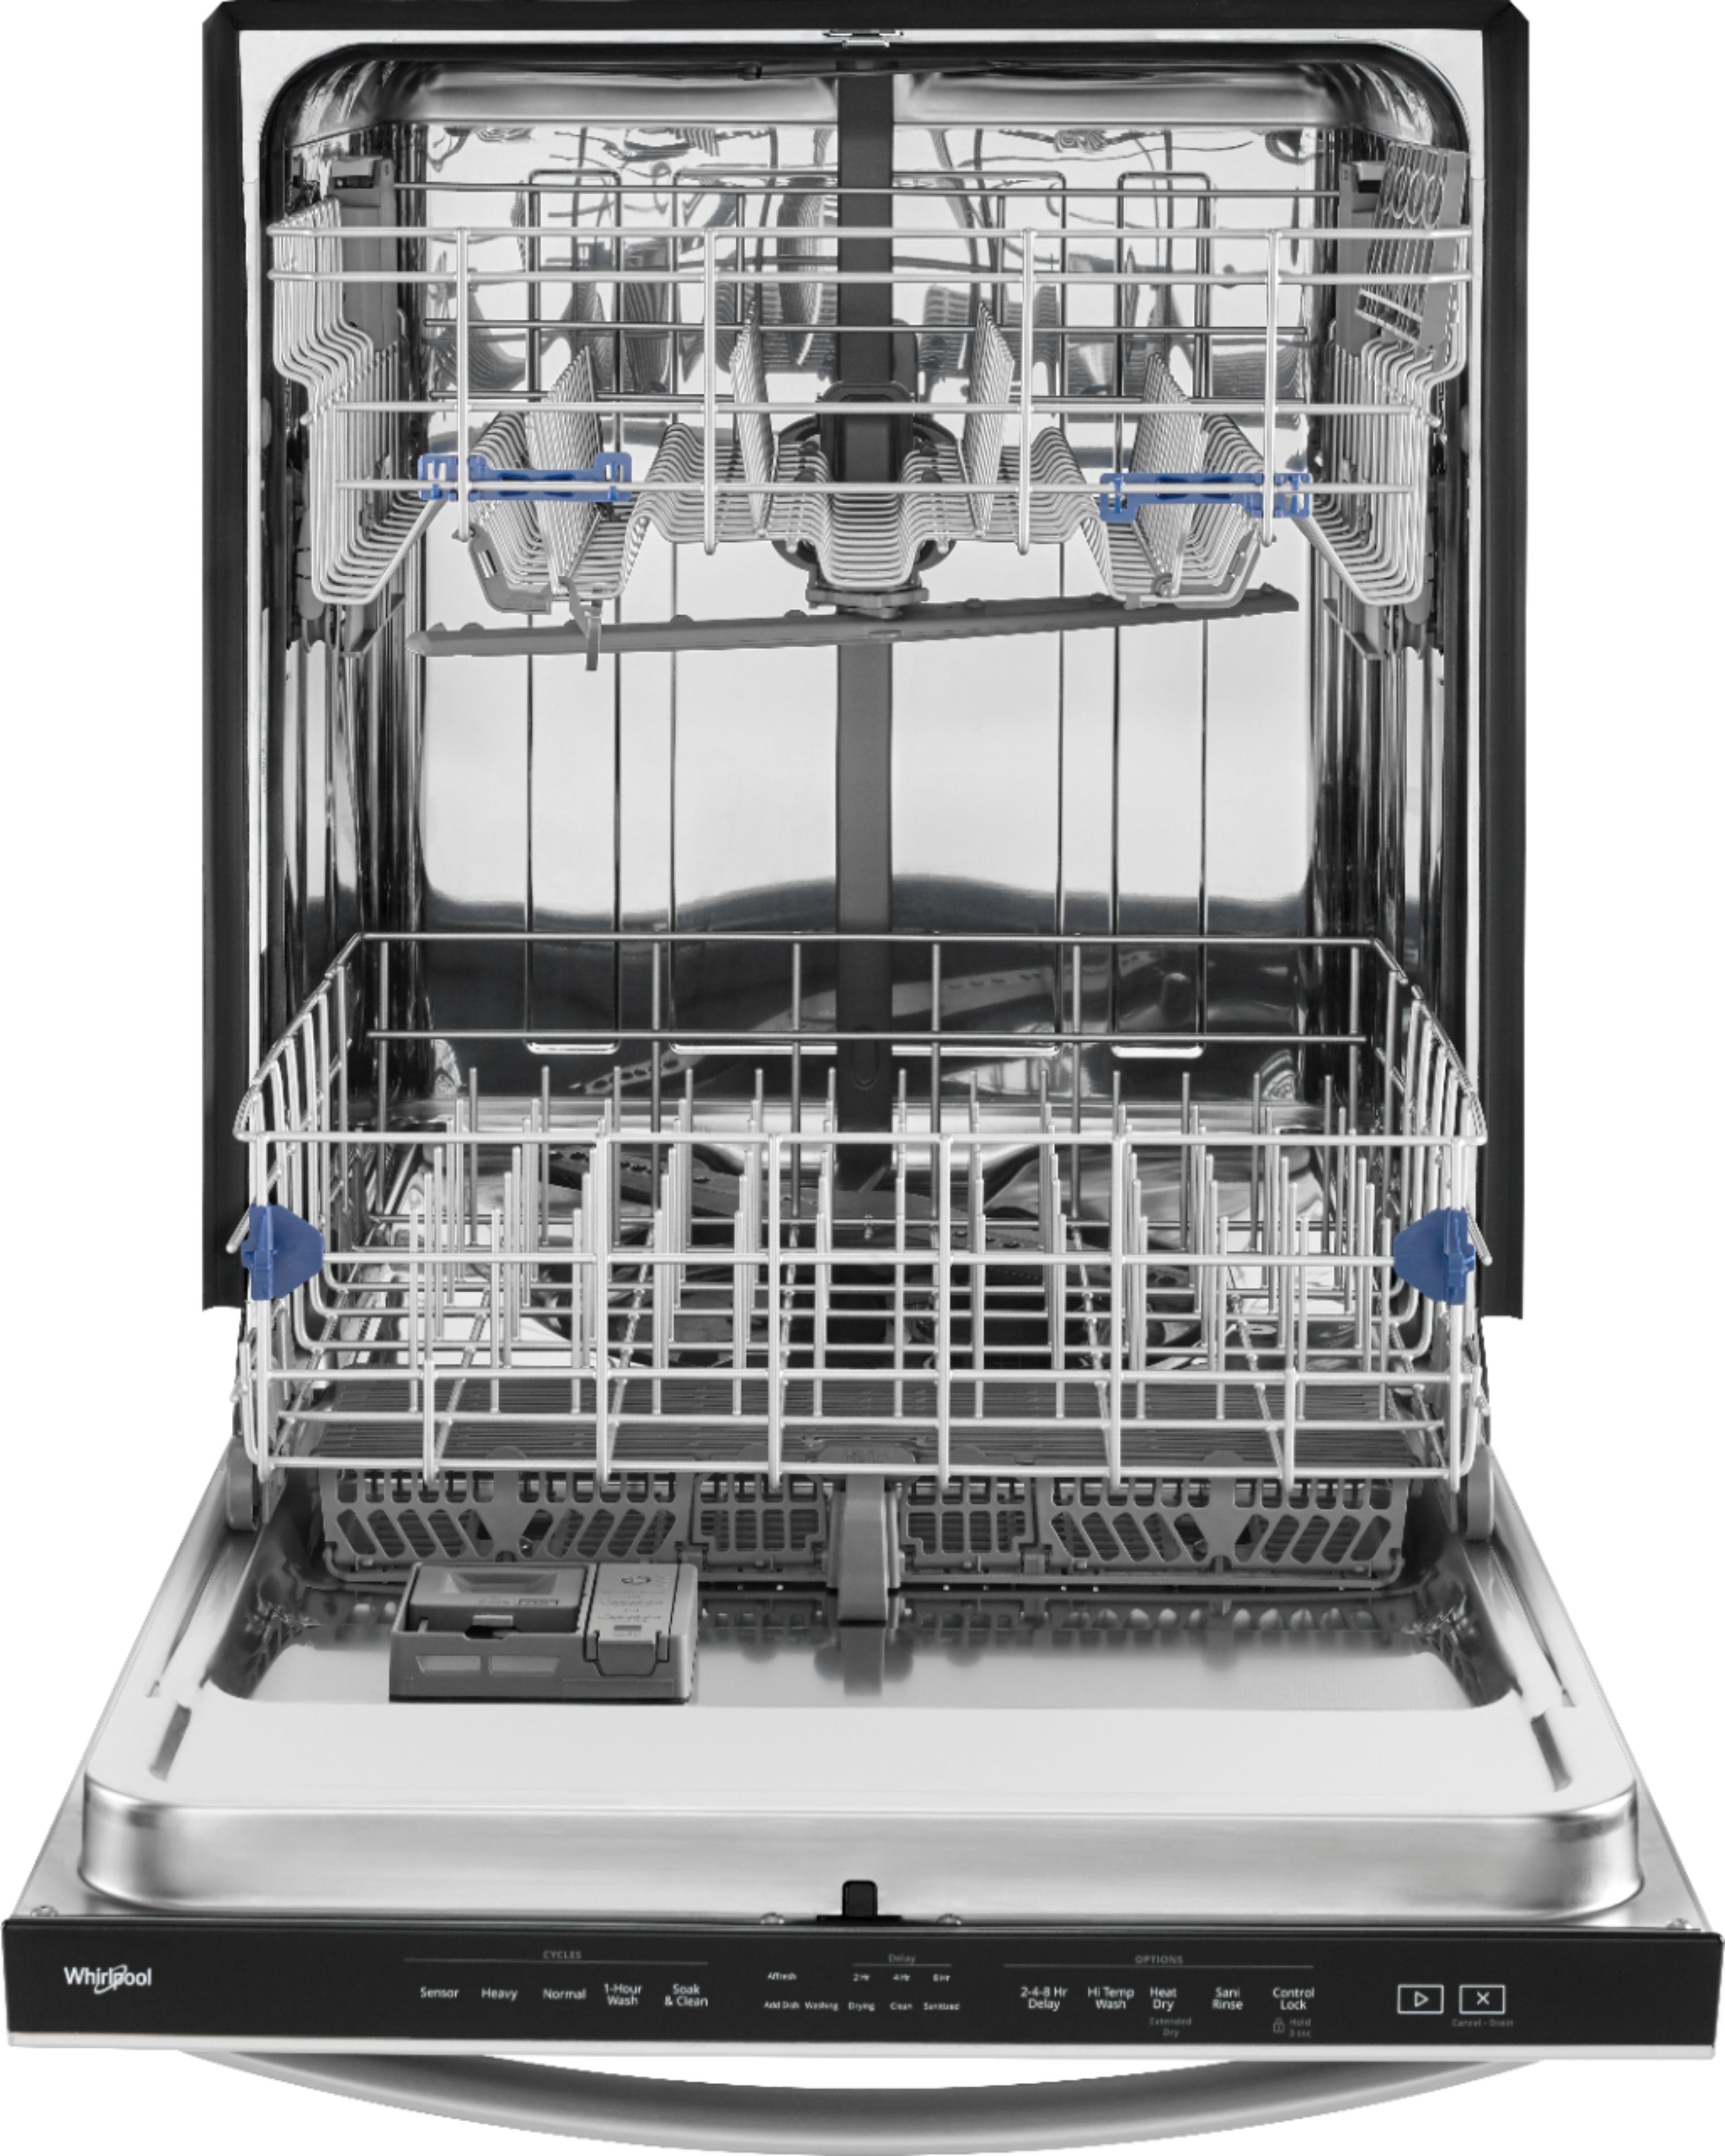 26 inch dishwasher